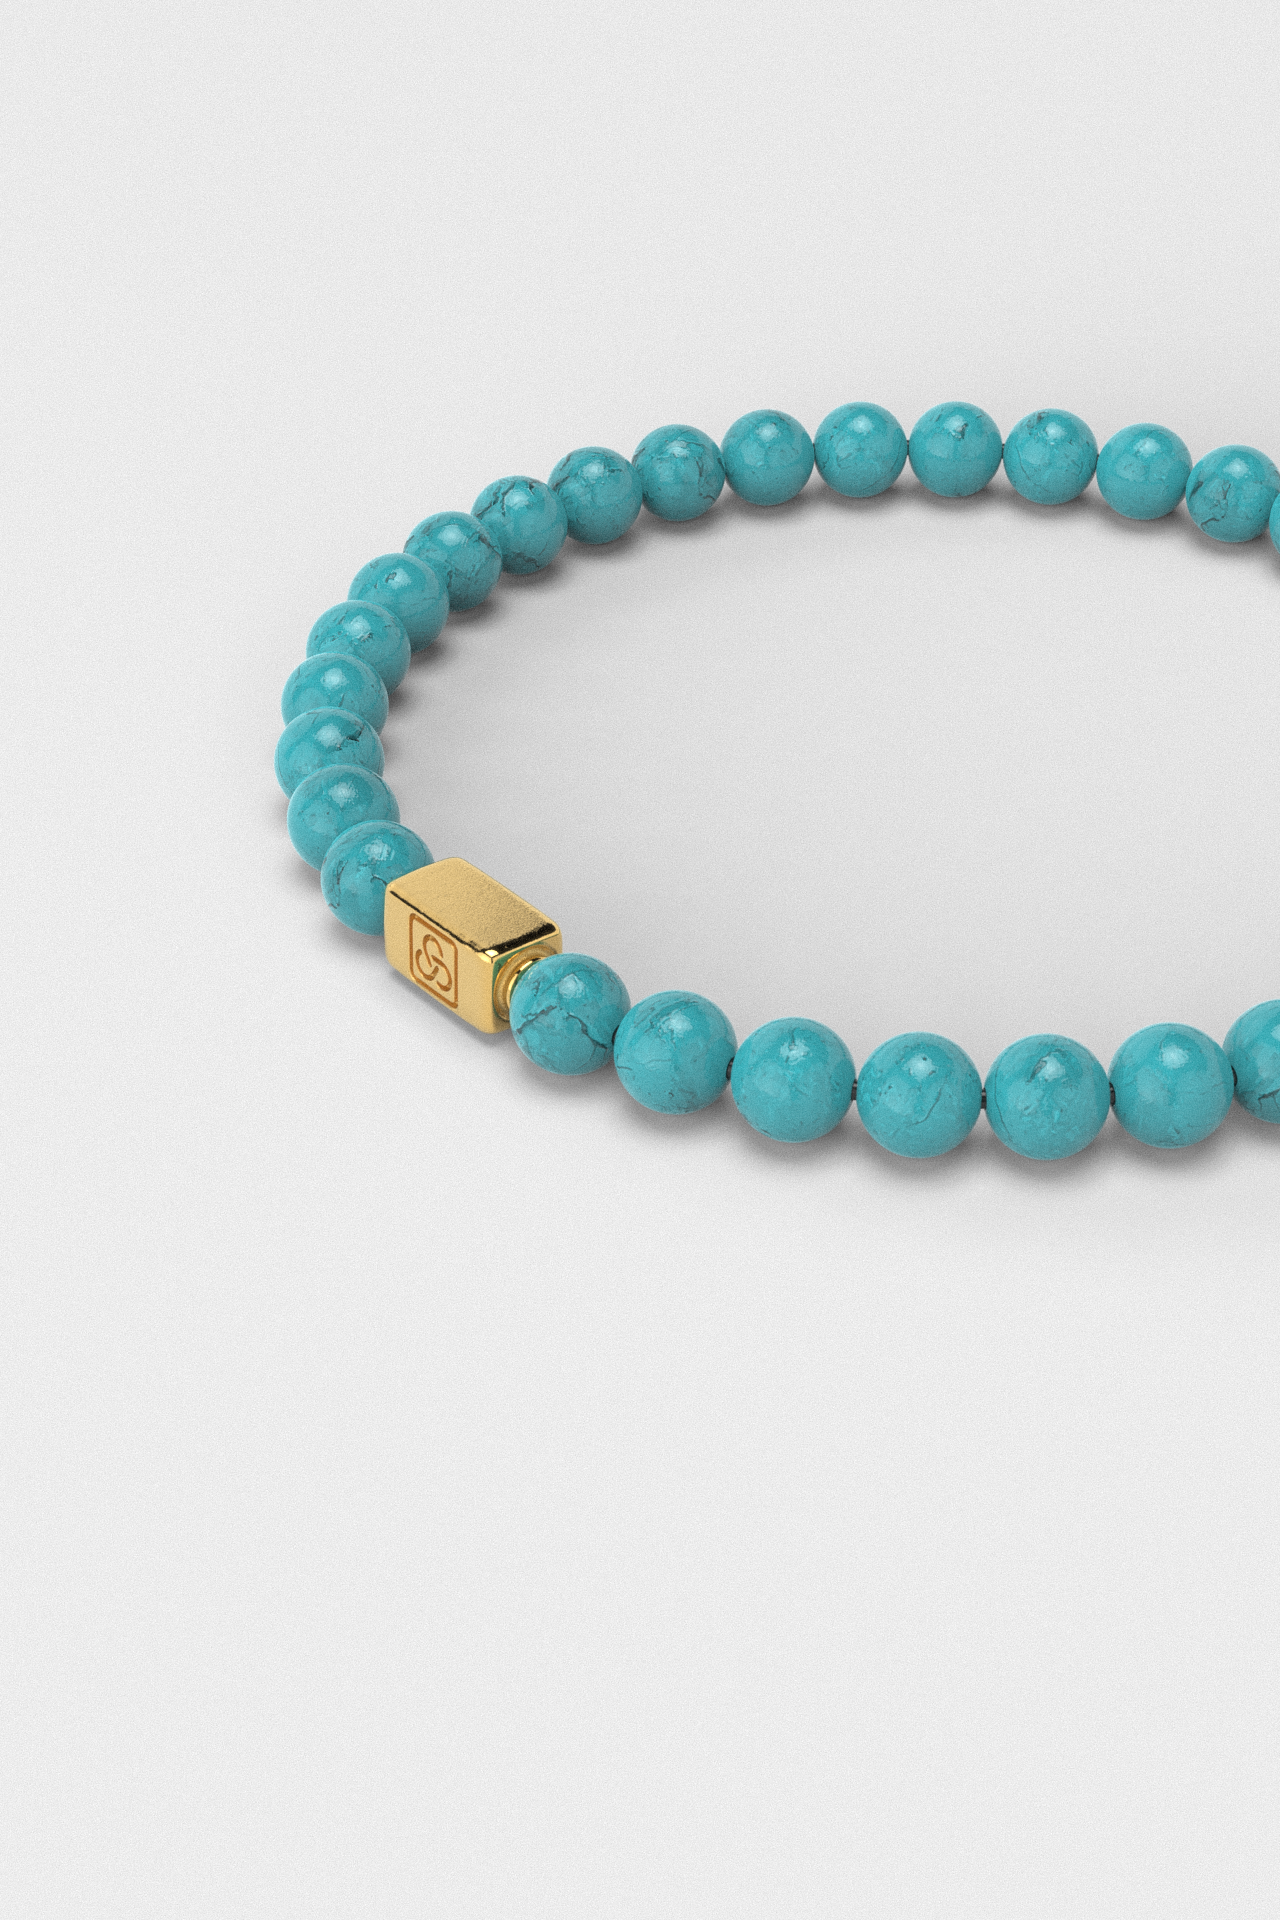 Turquoise Bracelet 6mm | Essential